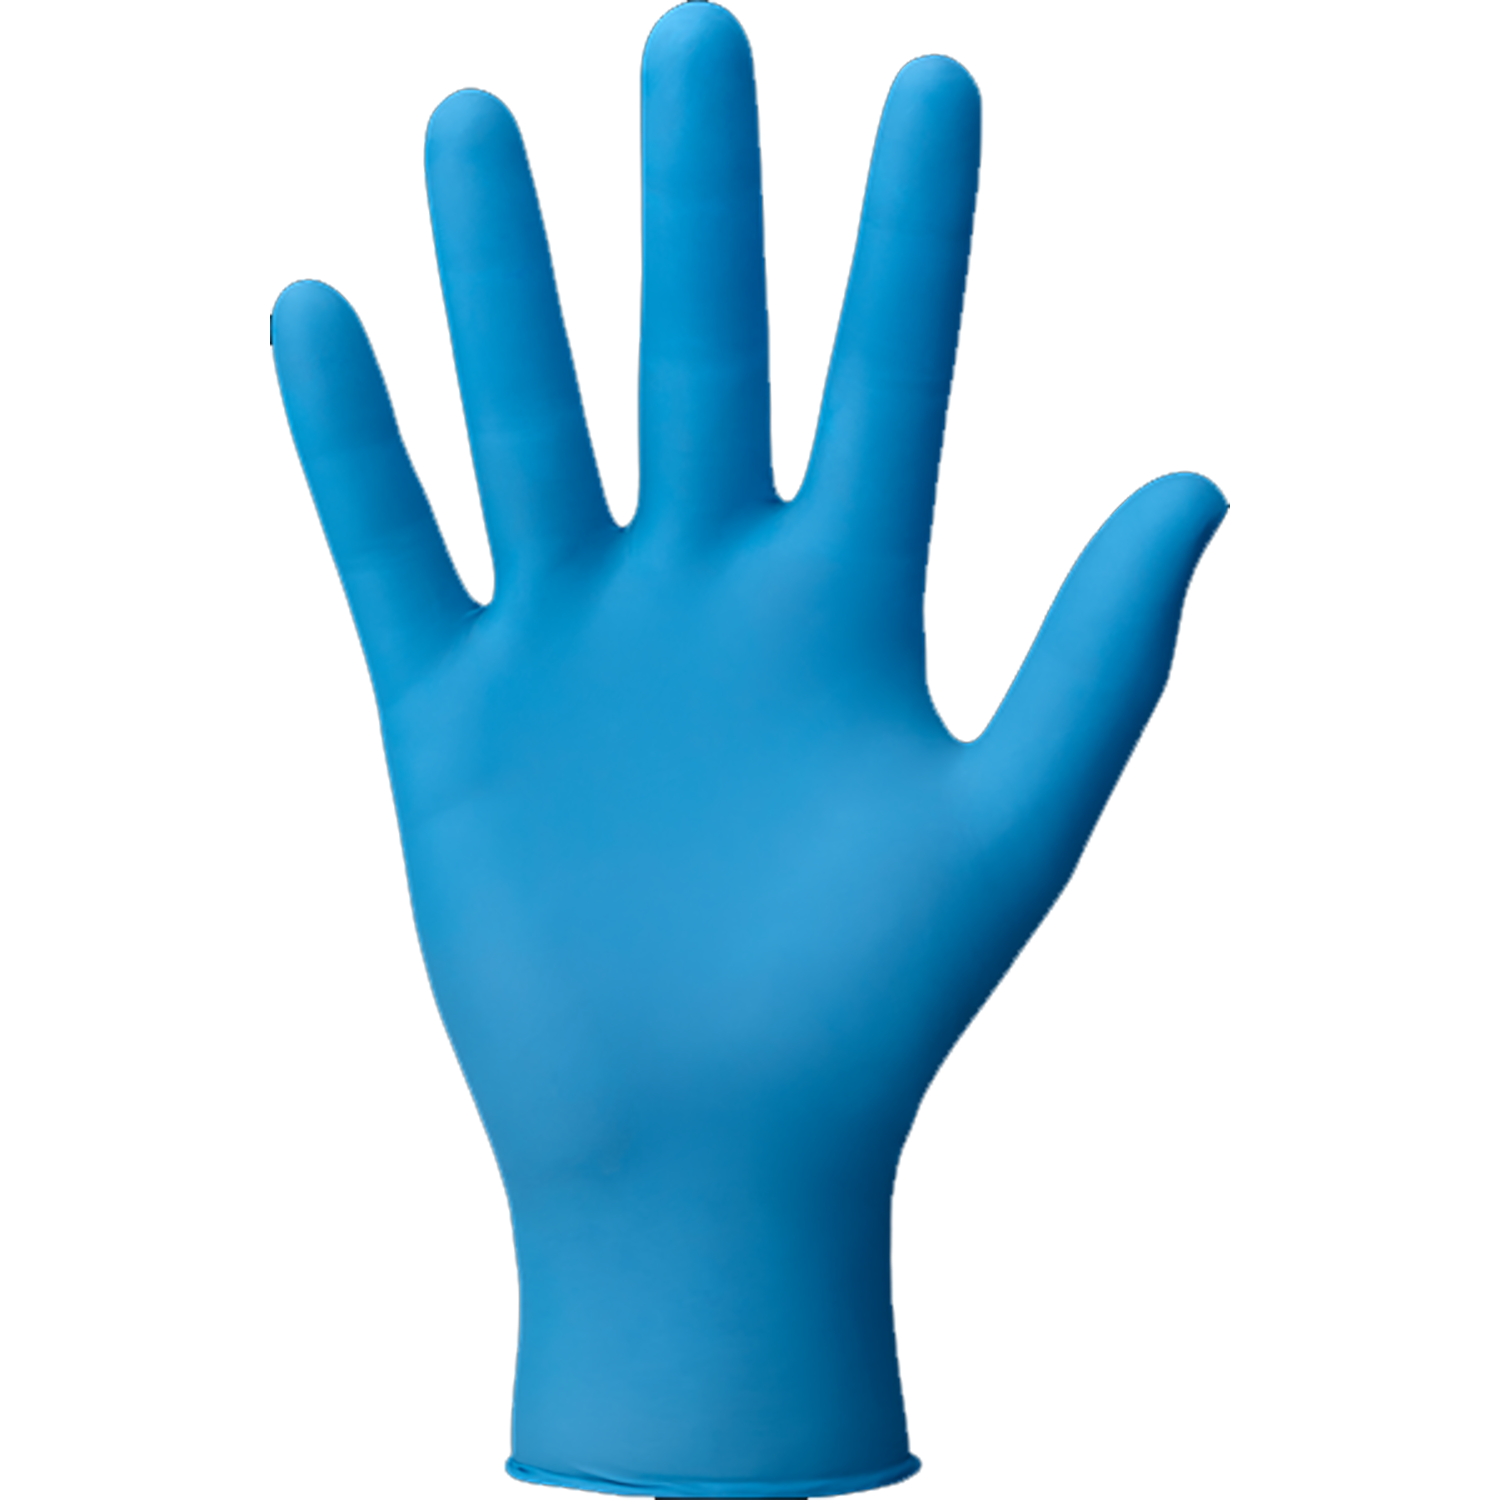 Teknik Blue Nitrile Powder-Free Gloves | Pack of 100 Pieces (1)